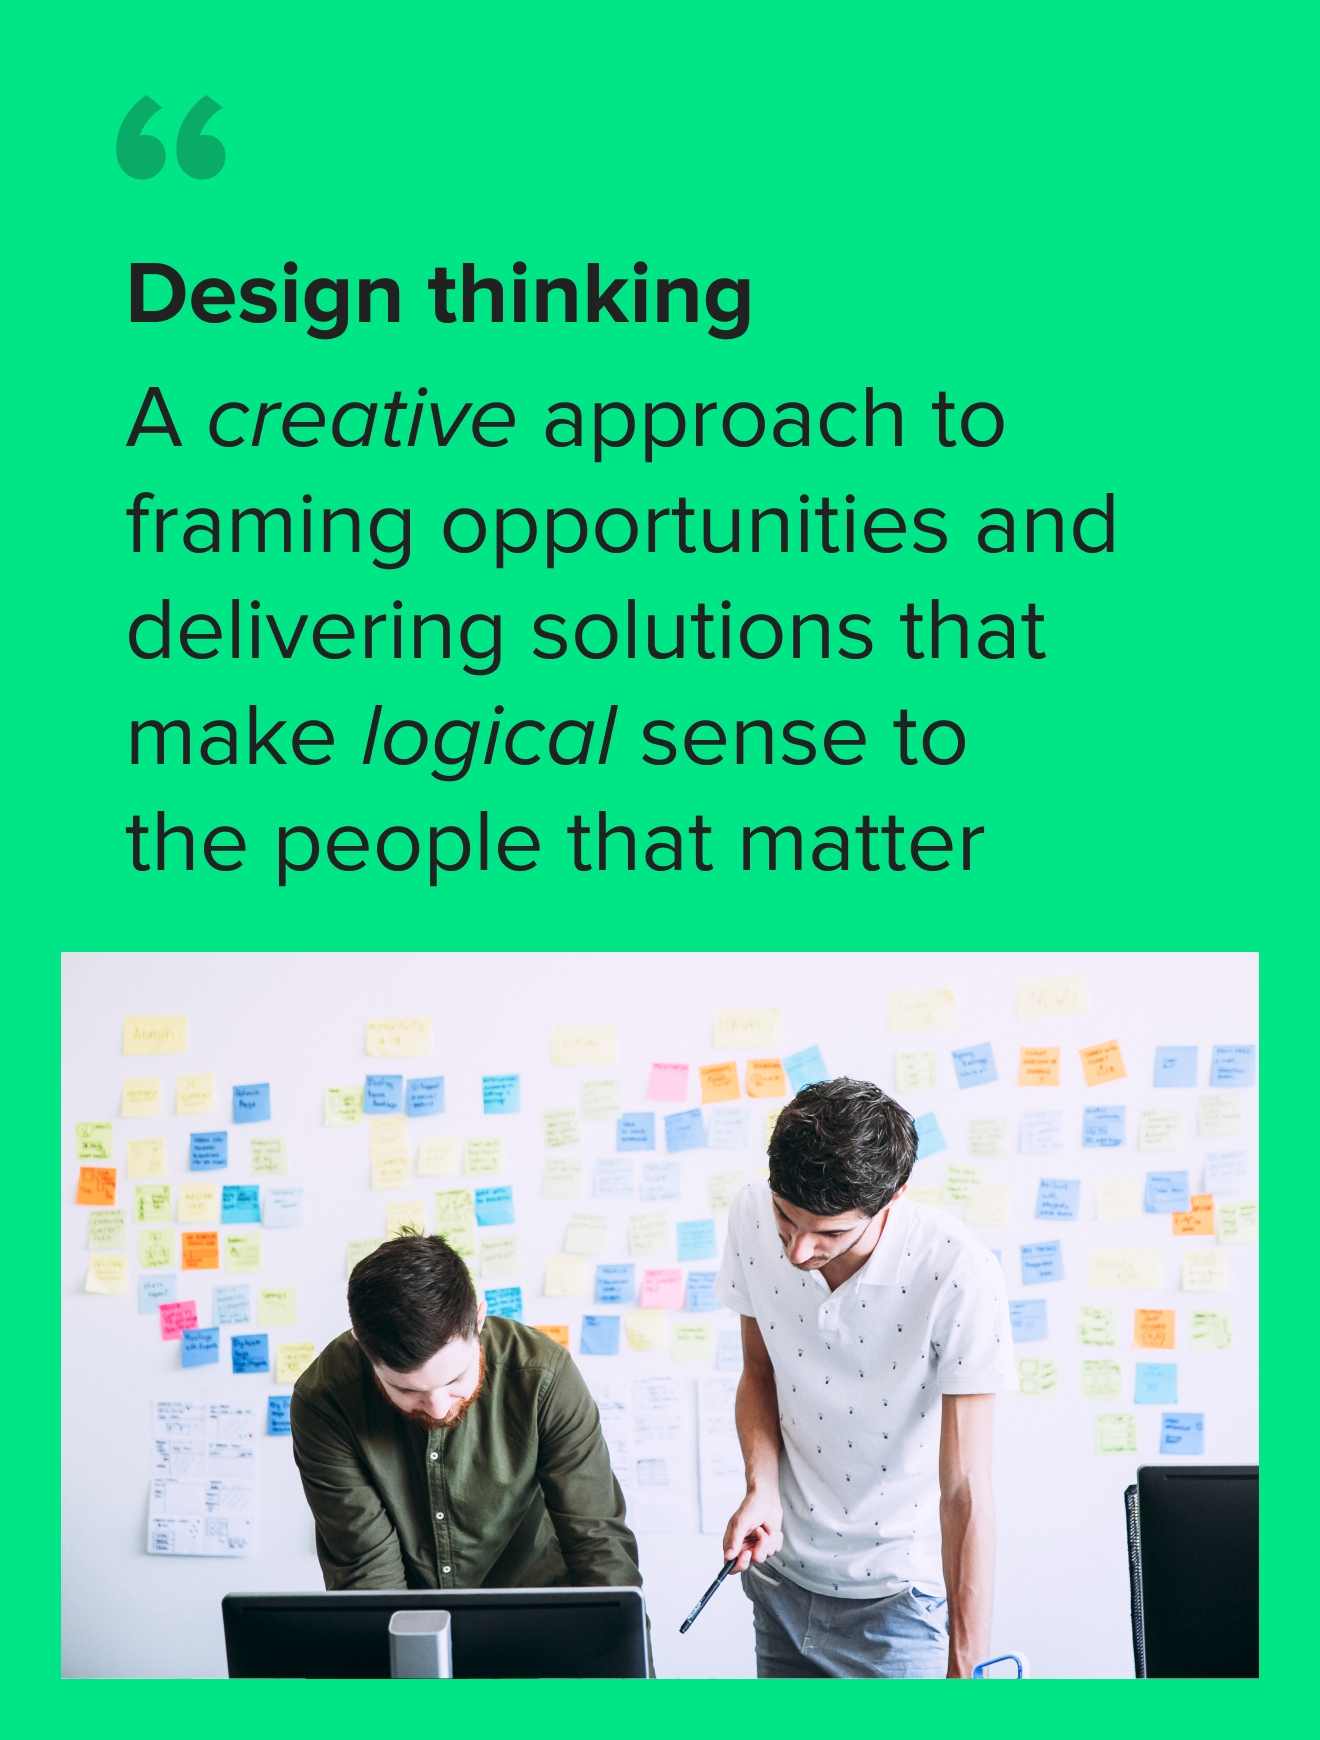 Design thinking approach in Fintech